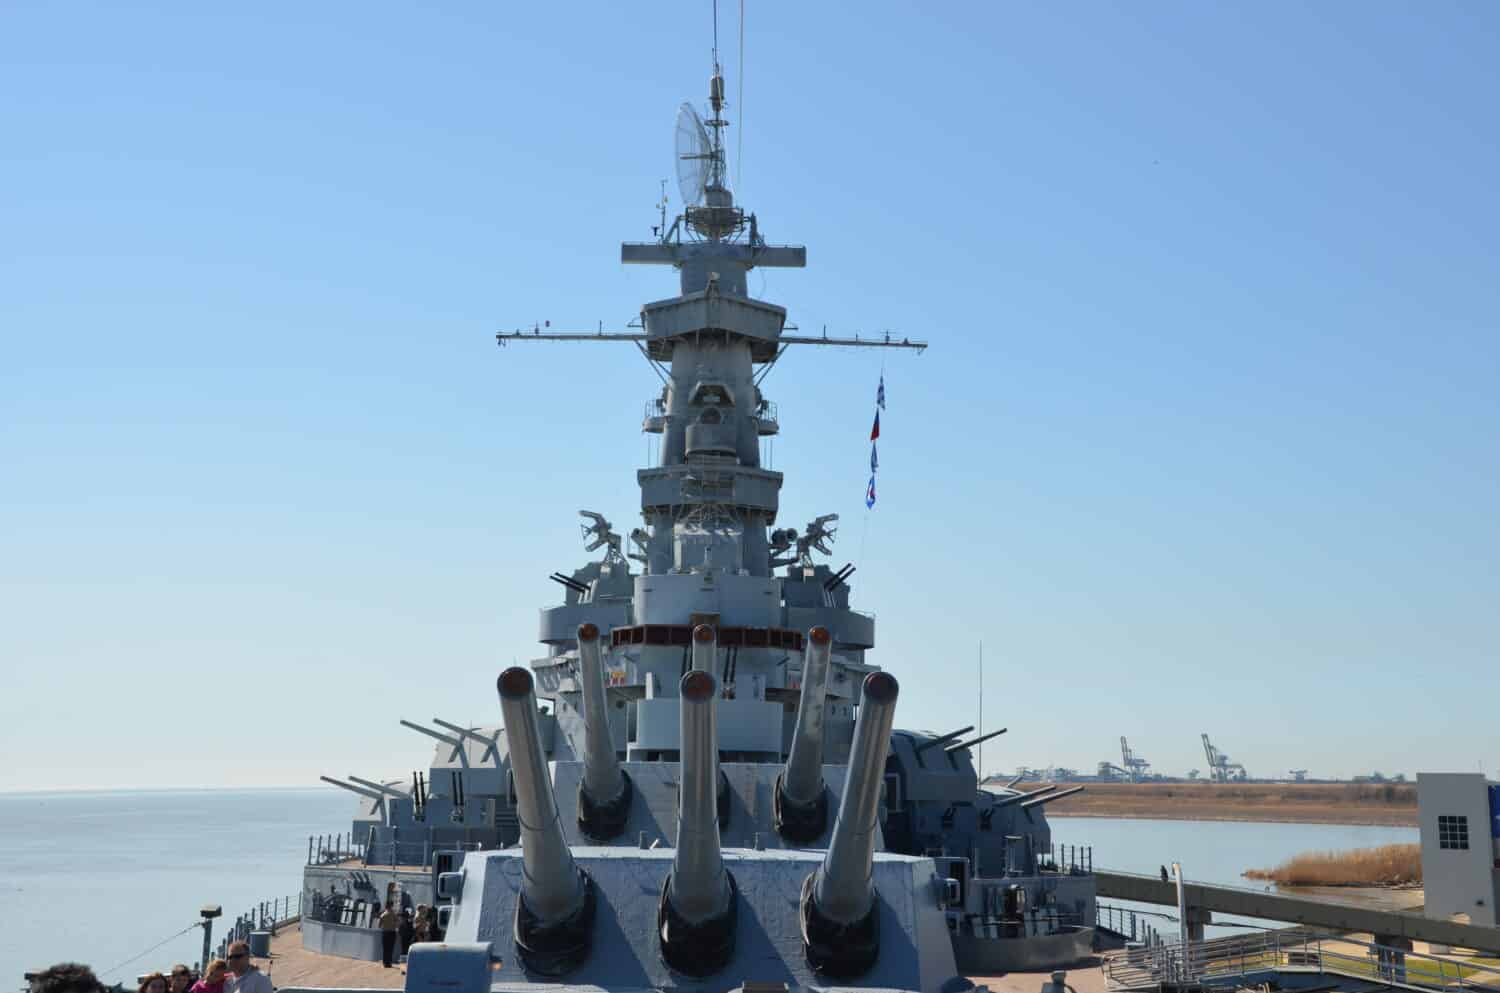 USS ALABAMA / BATTLESHIP PARK, MOBILE AL 